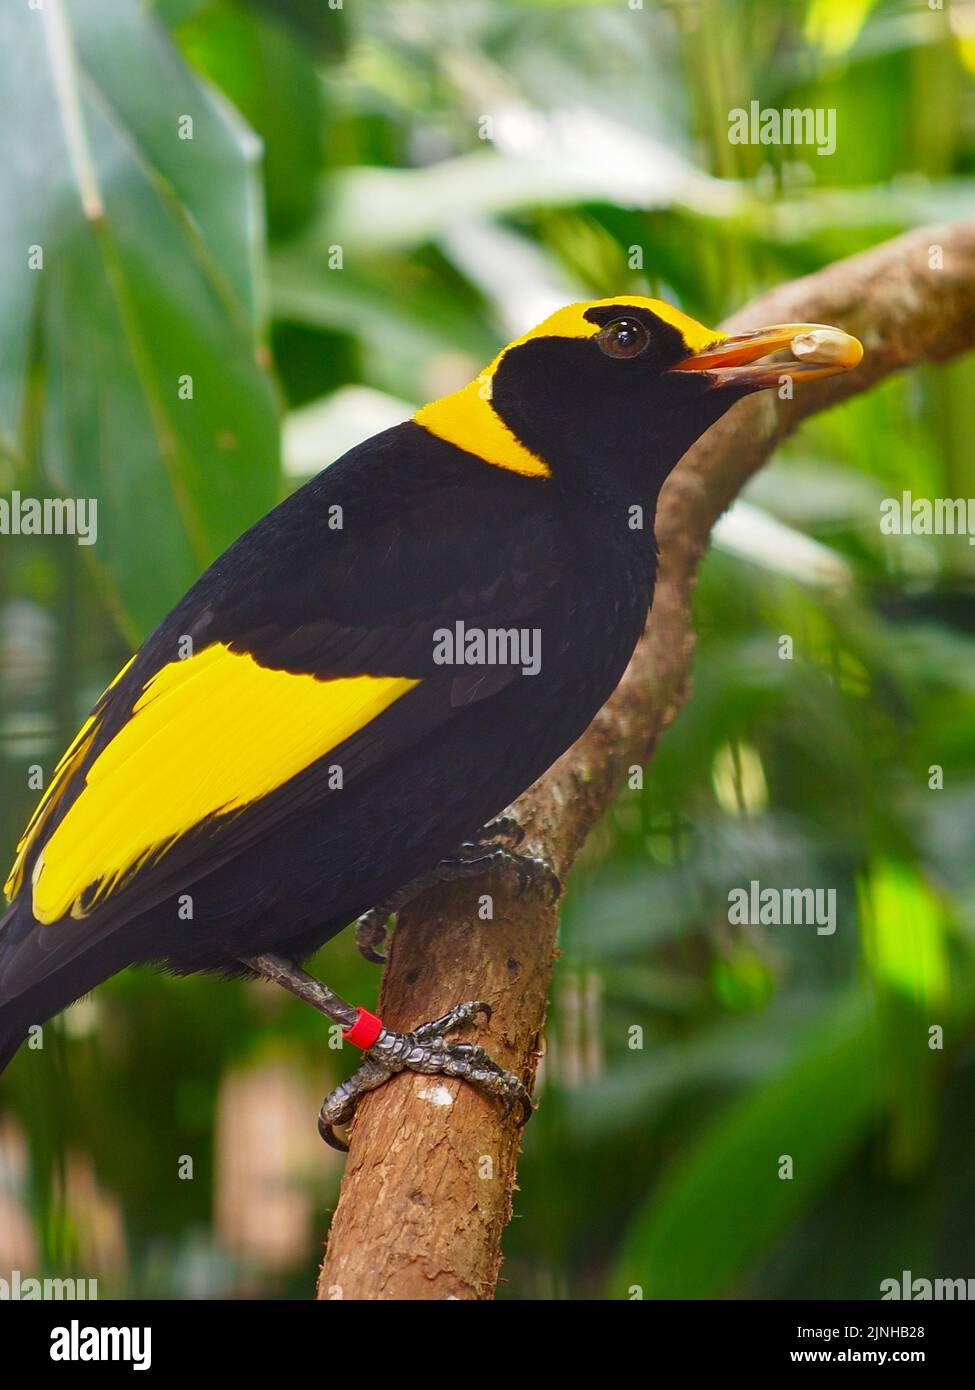 Exquisite elegant male Regent Bowerbird with distinctive yellow and black plumage. Stock Photo